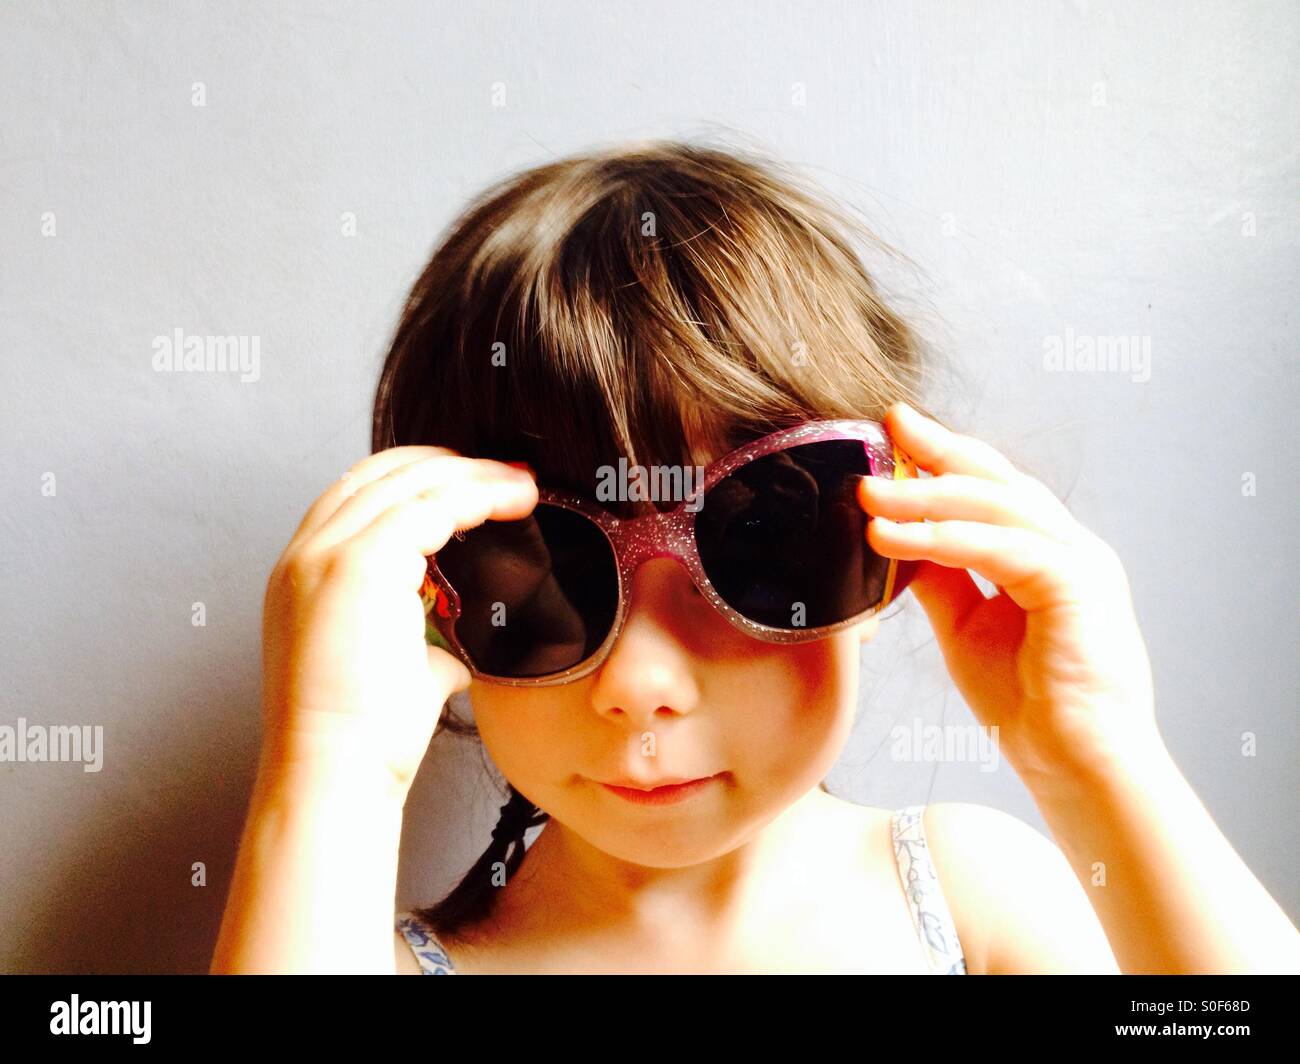 3-year old girl wearing sunglasses Stock Photo